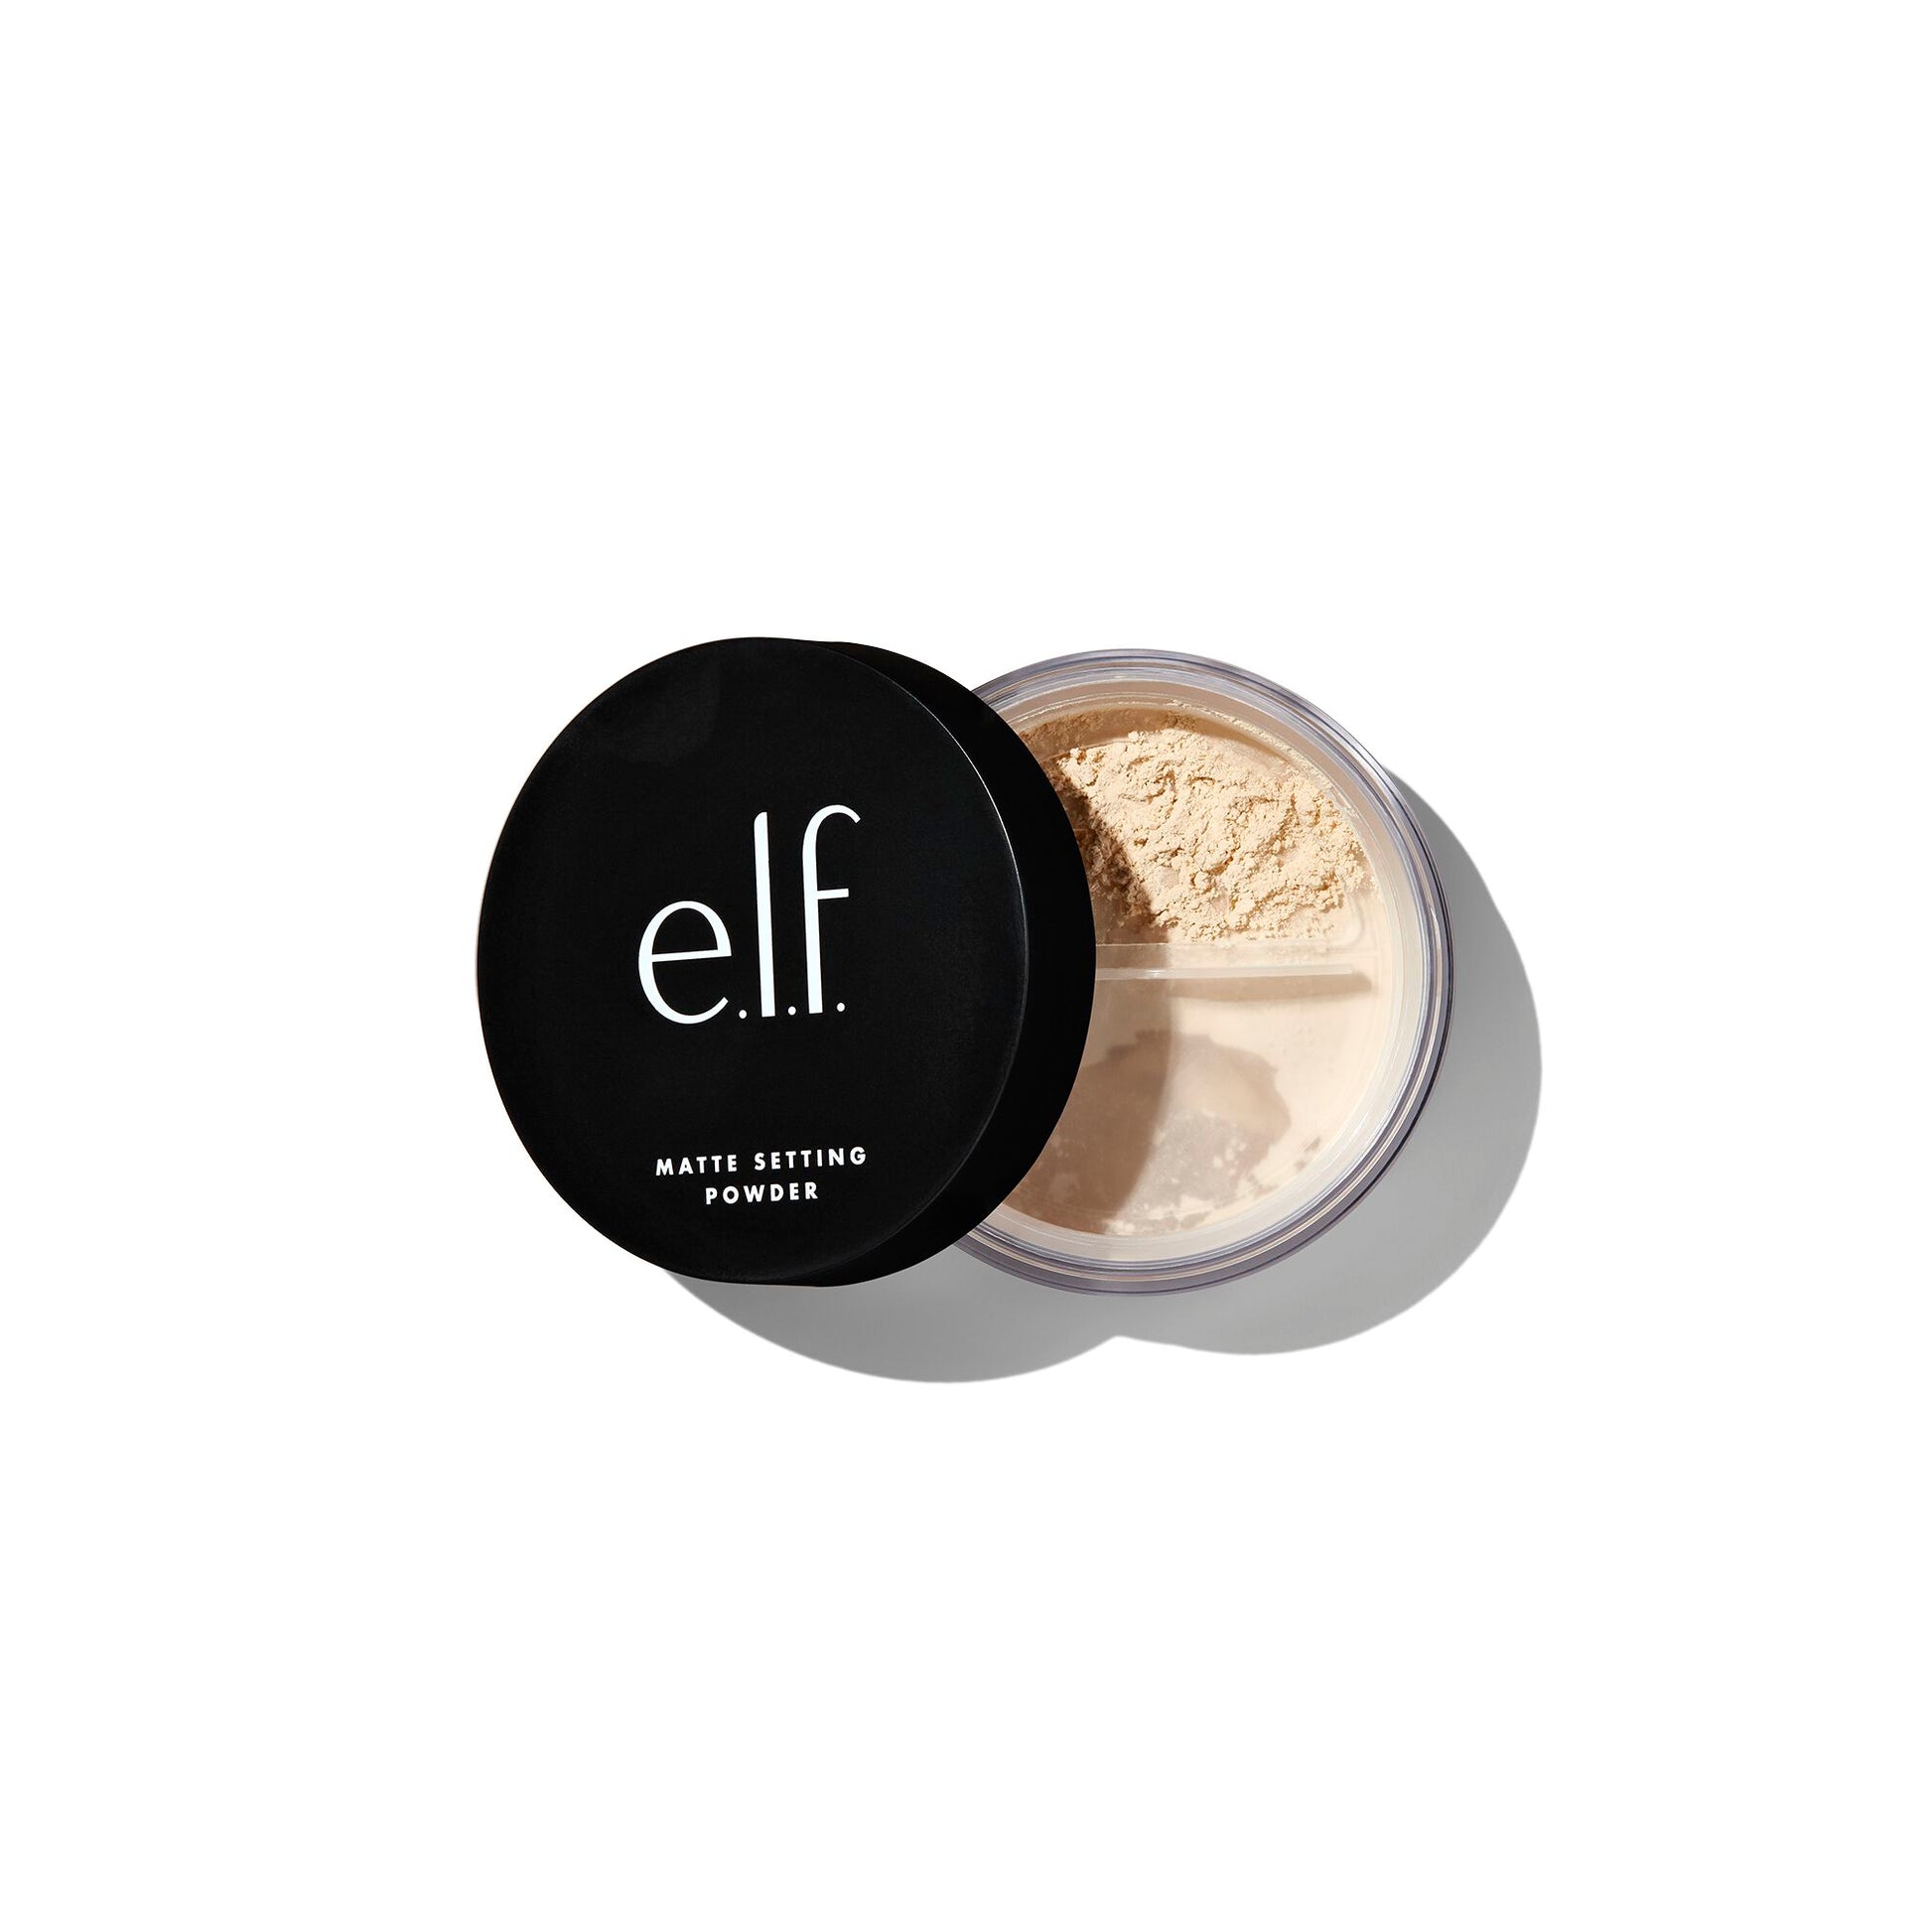 e.l.f. Cosmetics Matte Setting Powder- Light 7.5g